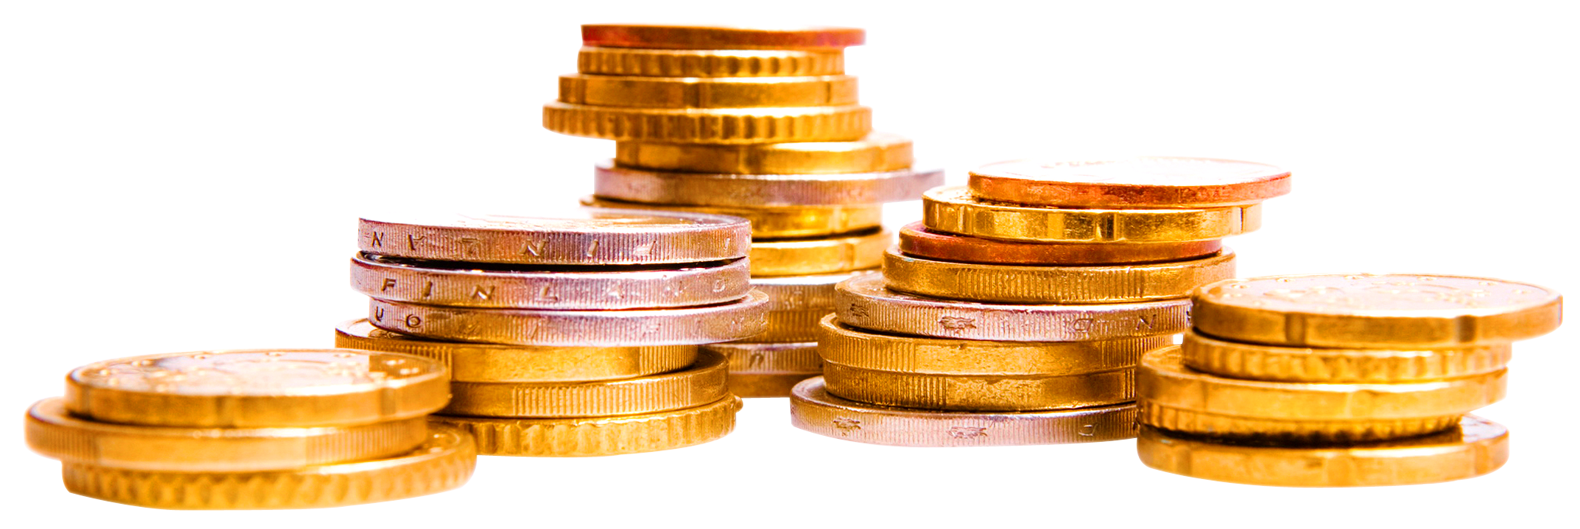 Download PNG image - Money Golden Coins Stack PNG Image 